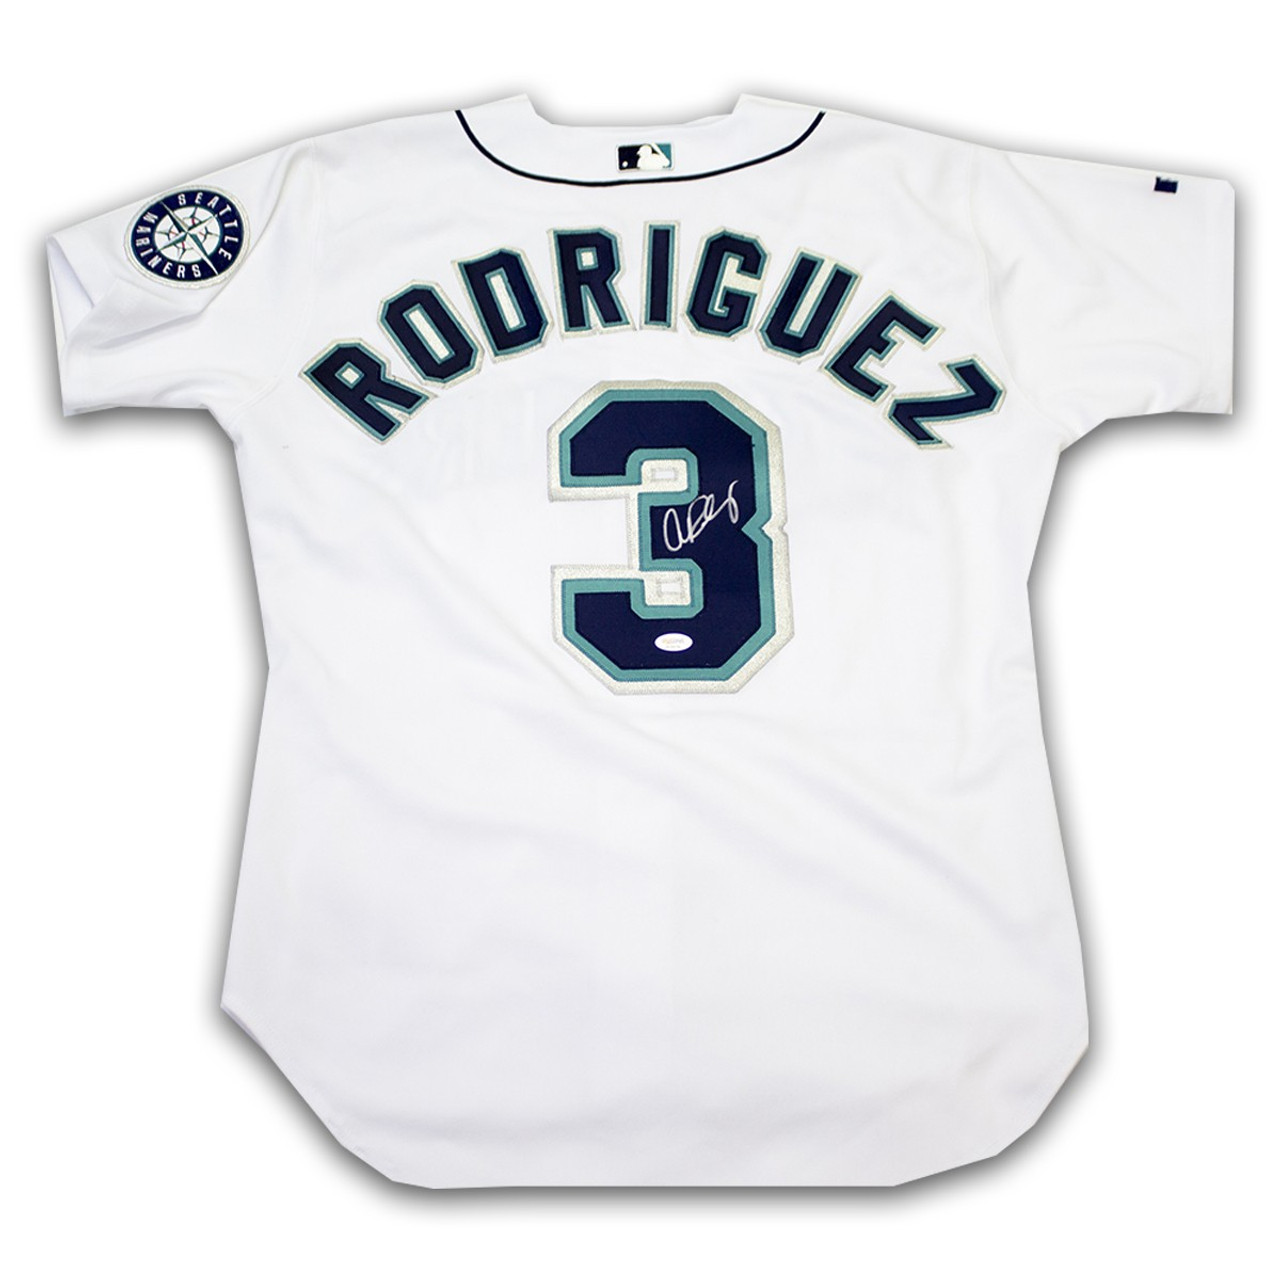 Alex Rodriguez Autographed Seattle Mariners Baseball Jersey- PSA/DNA